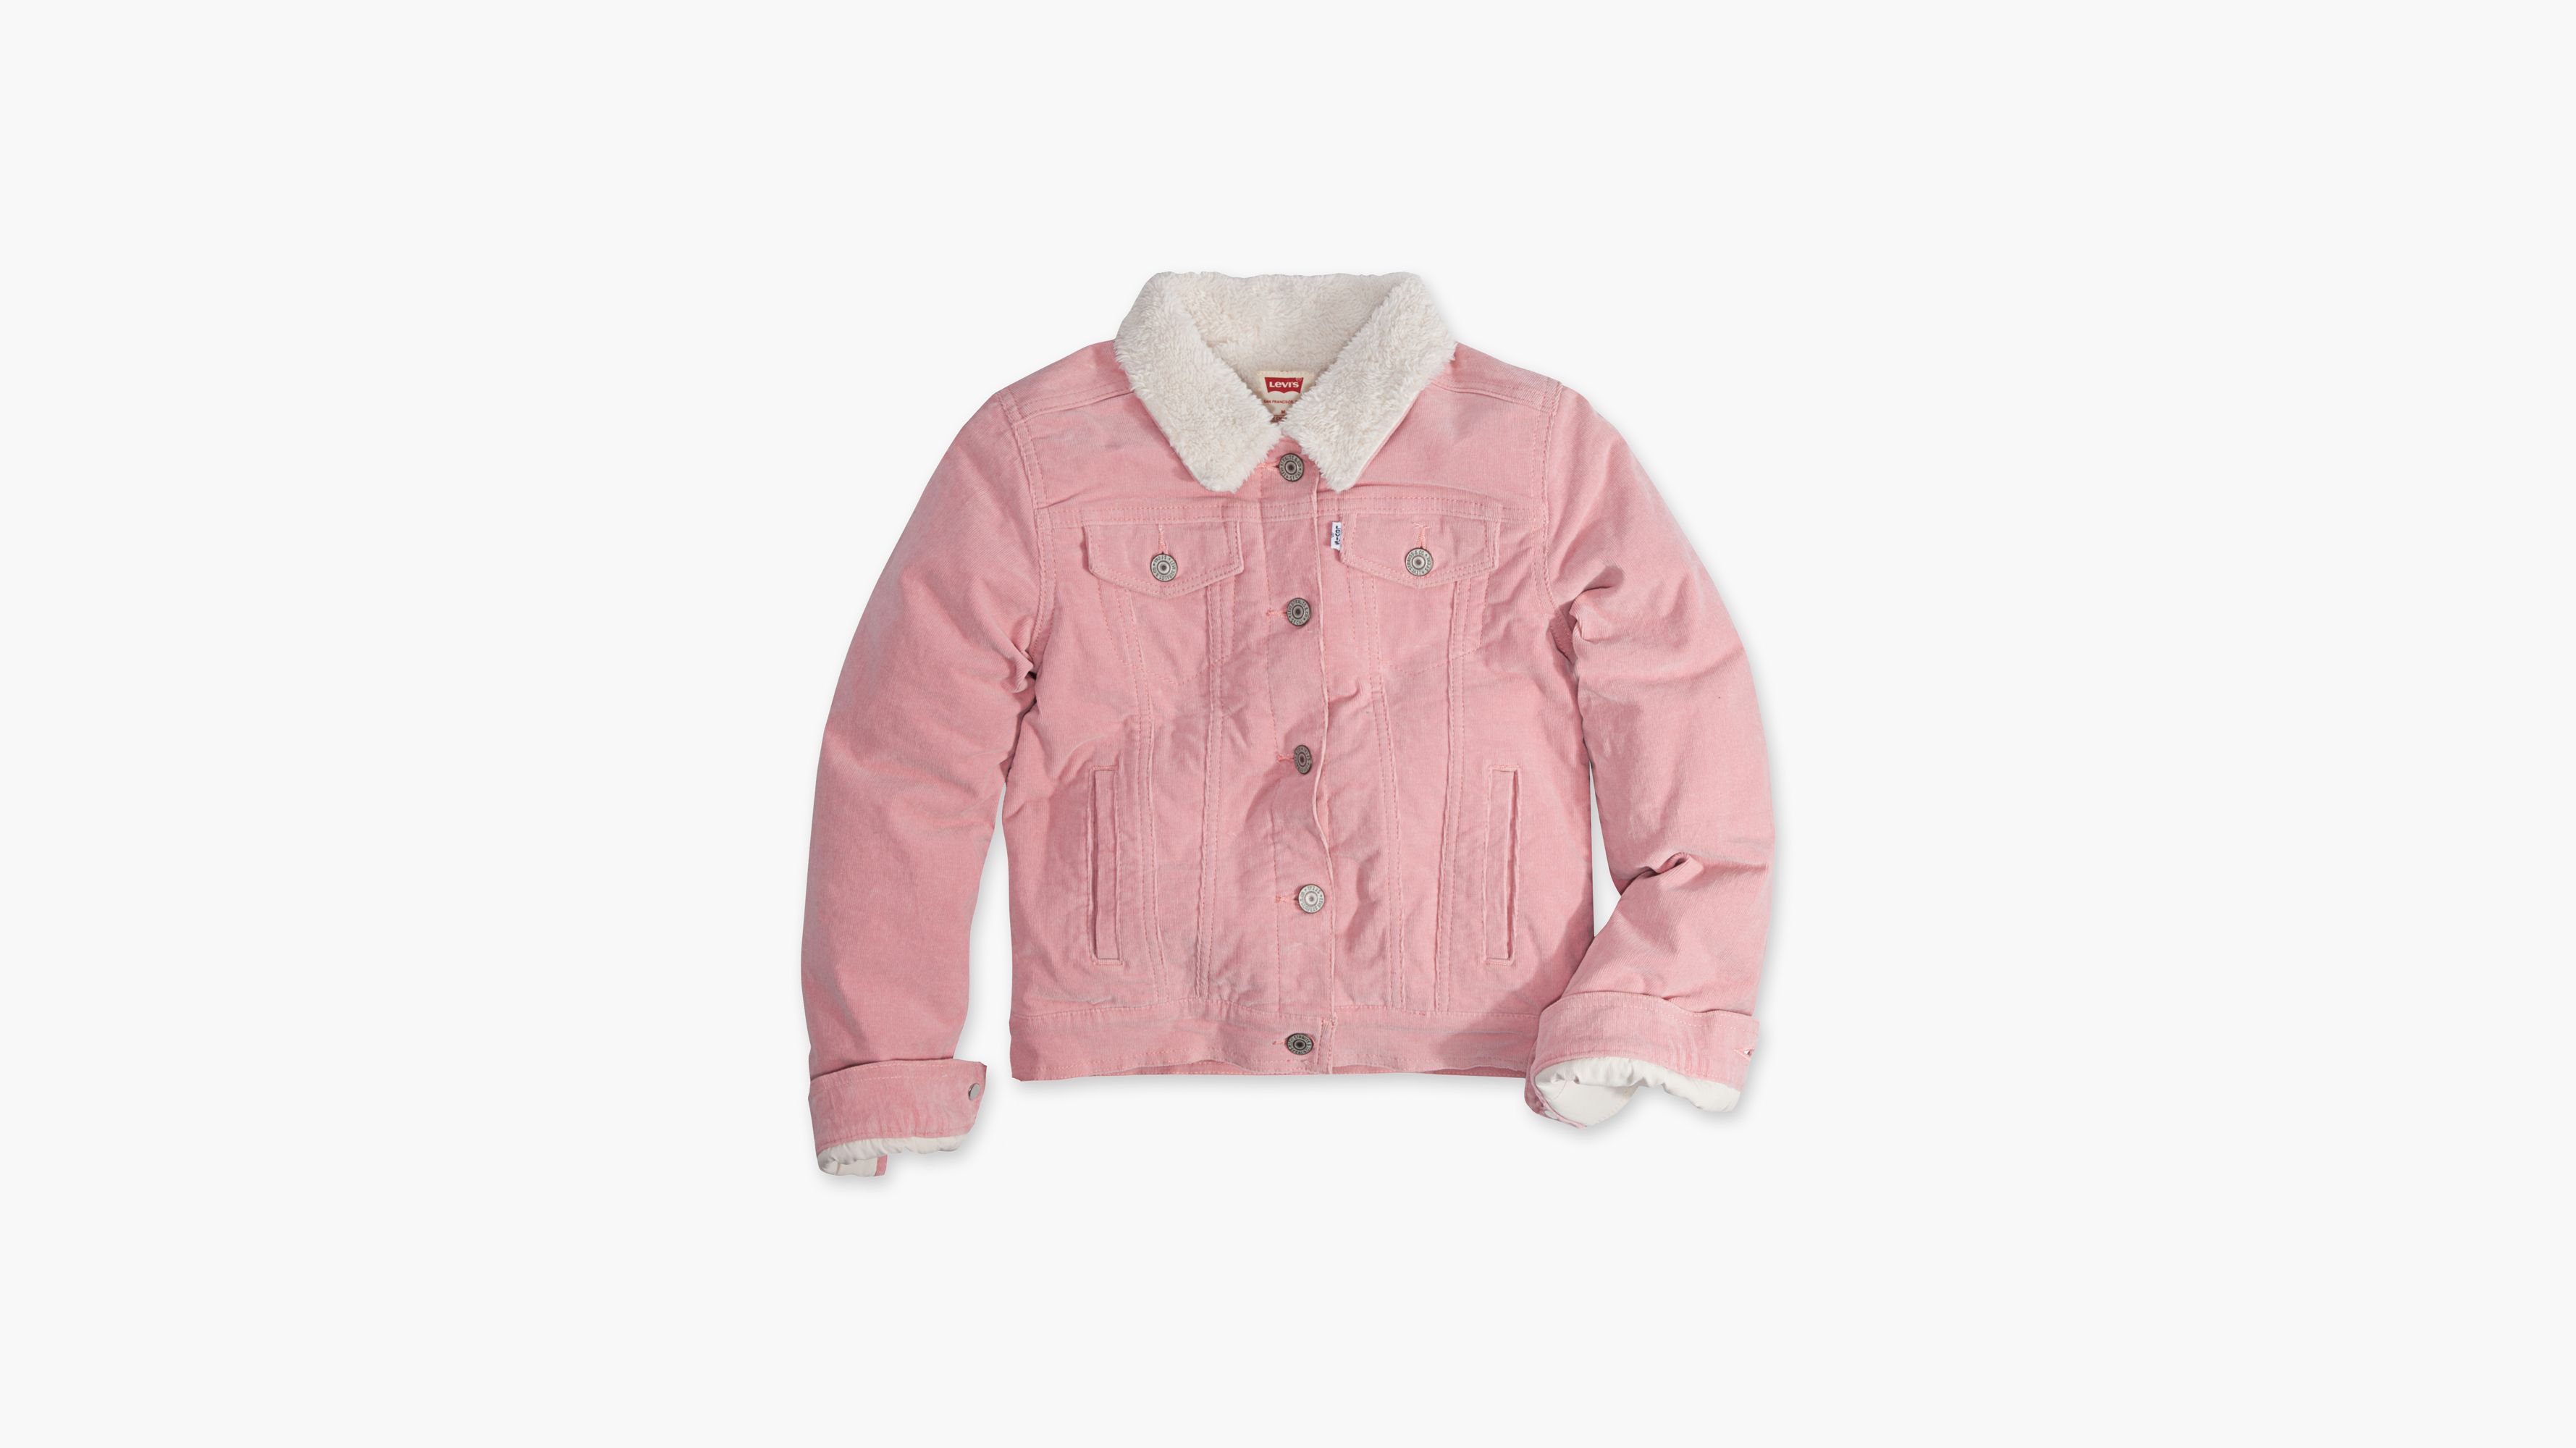 levis pink jacket